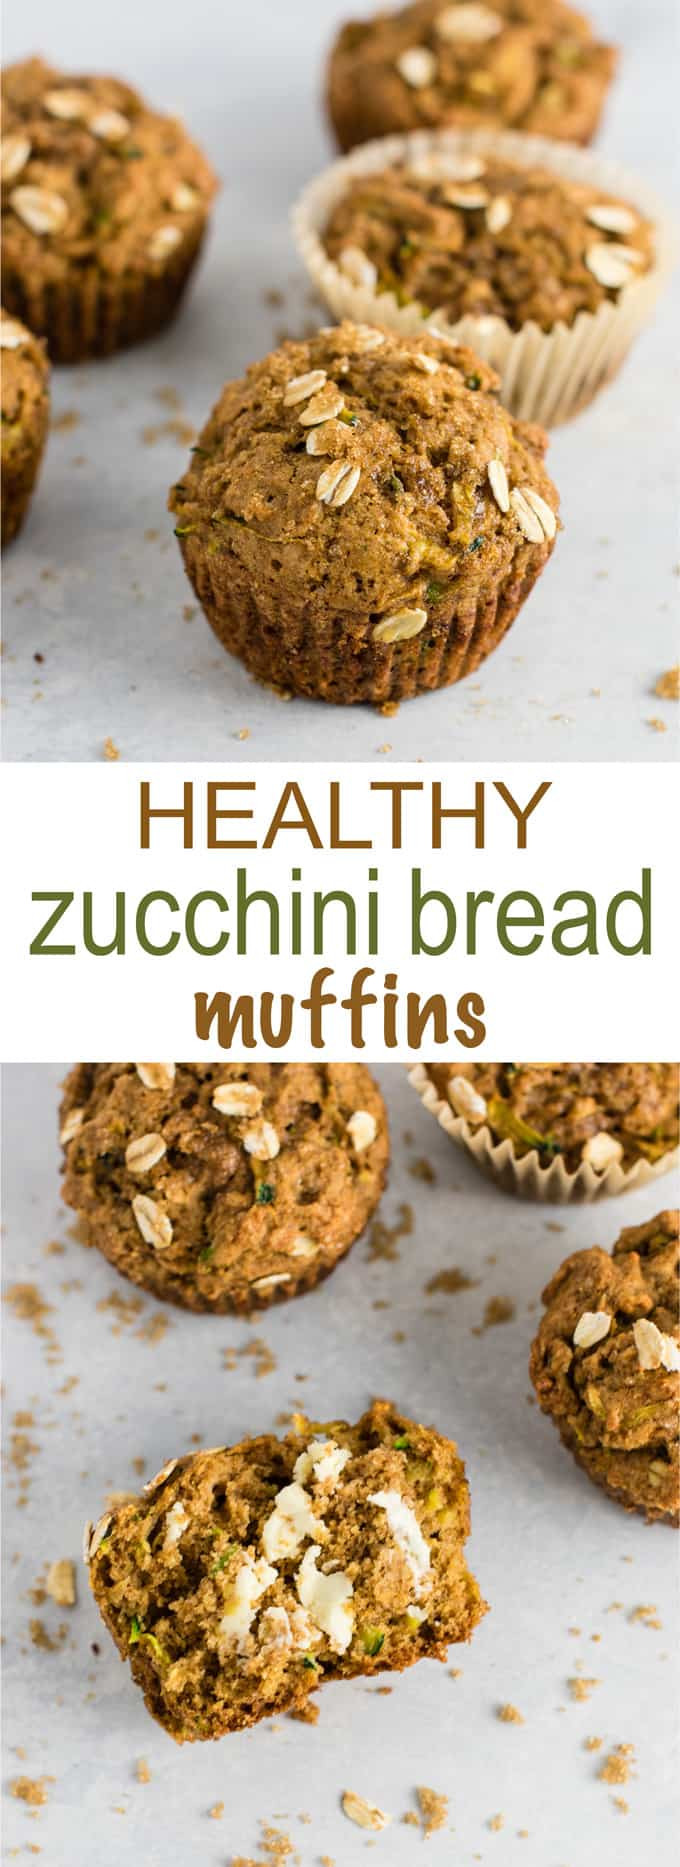 Healthy Zucchini Bread Muffins
 Healthy Zucchini Bread Muffins with brown sugar